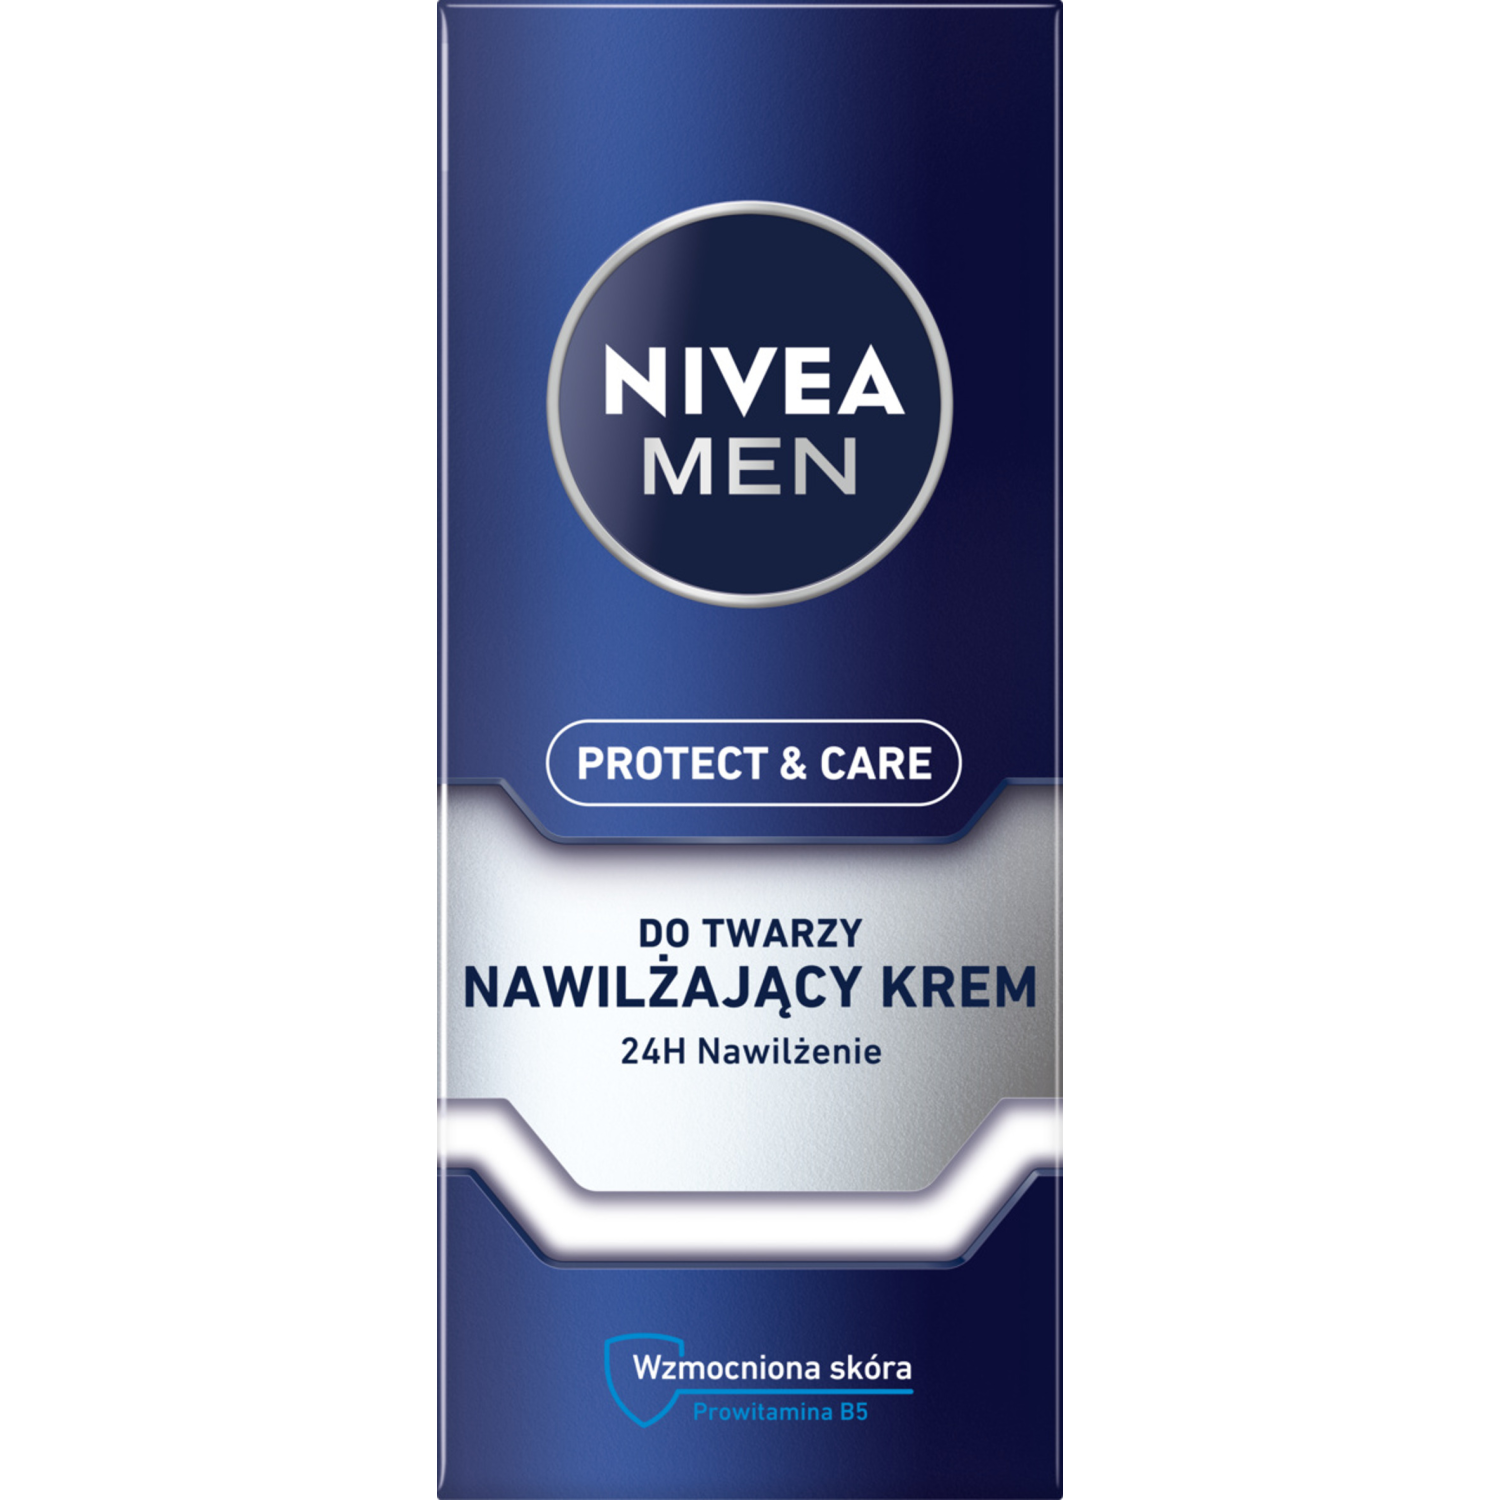 Nivea Men Protect & Care увлажняющий крем для лица для мужчин, 75 мл крем для лица nivea men 75 мл